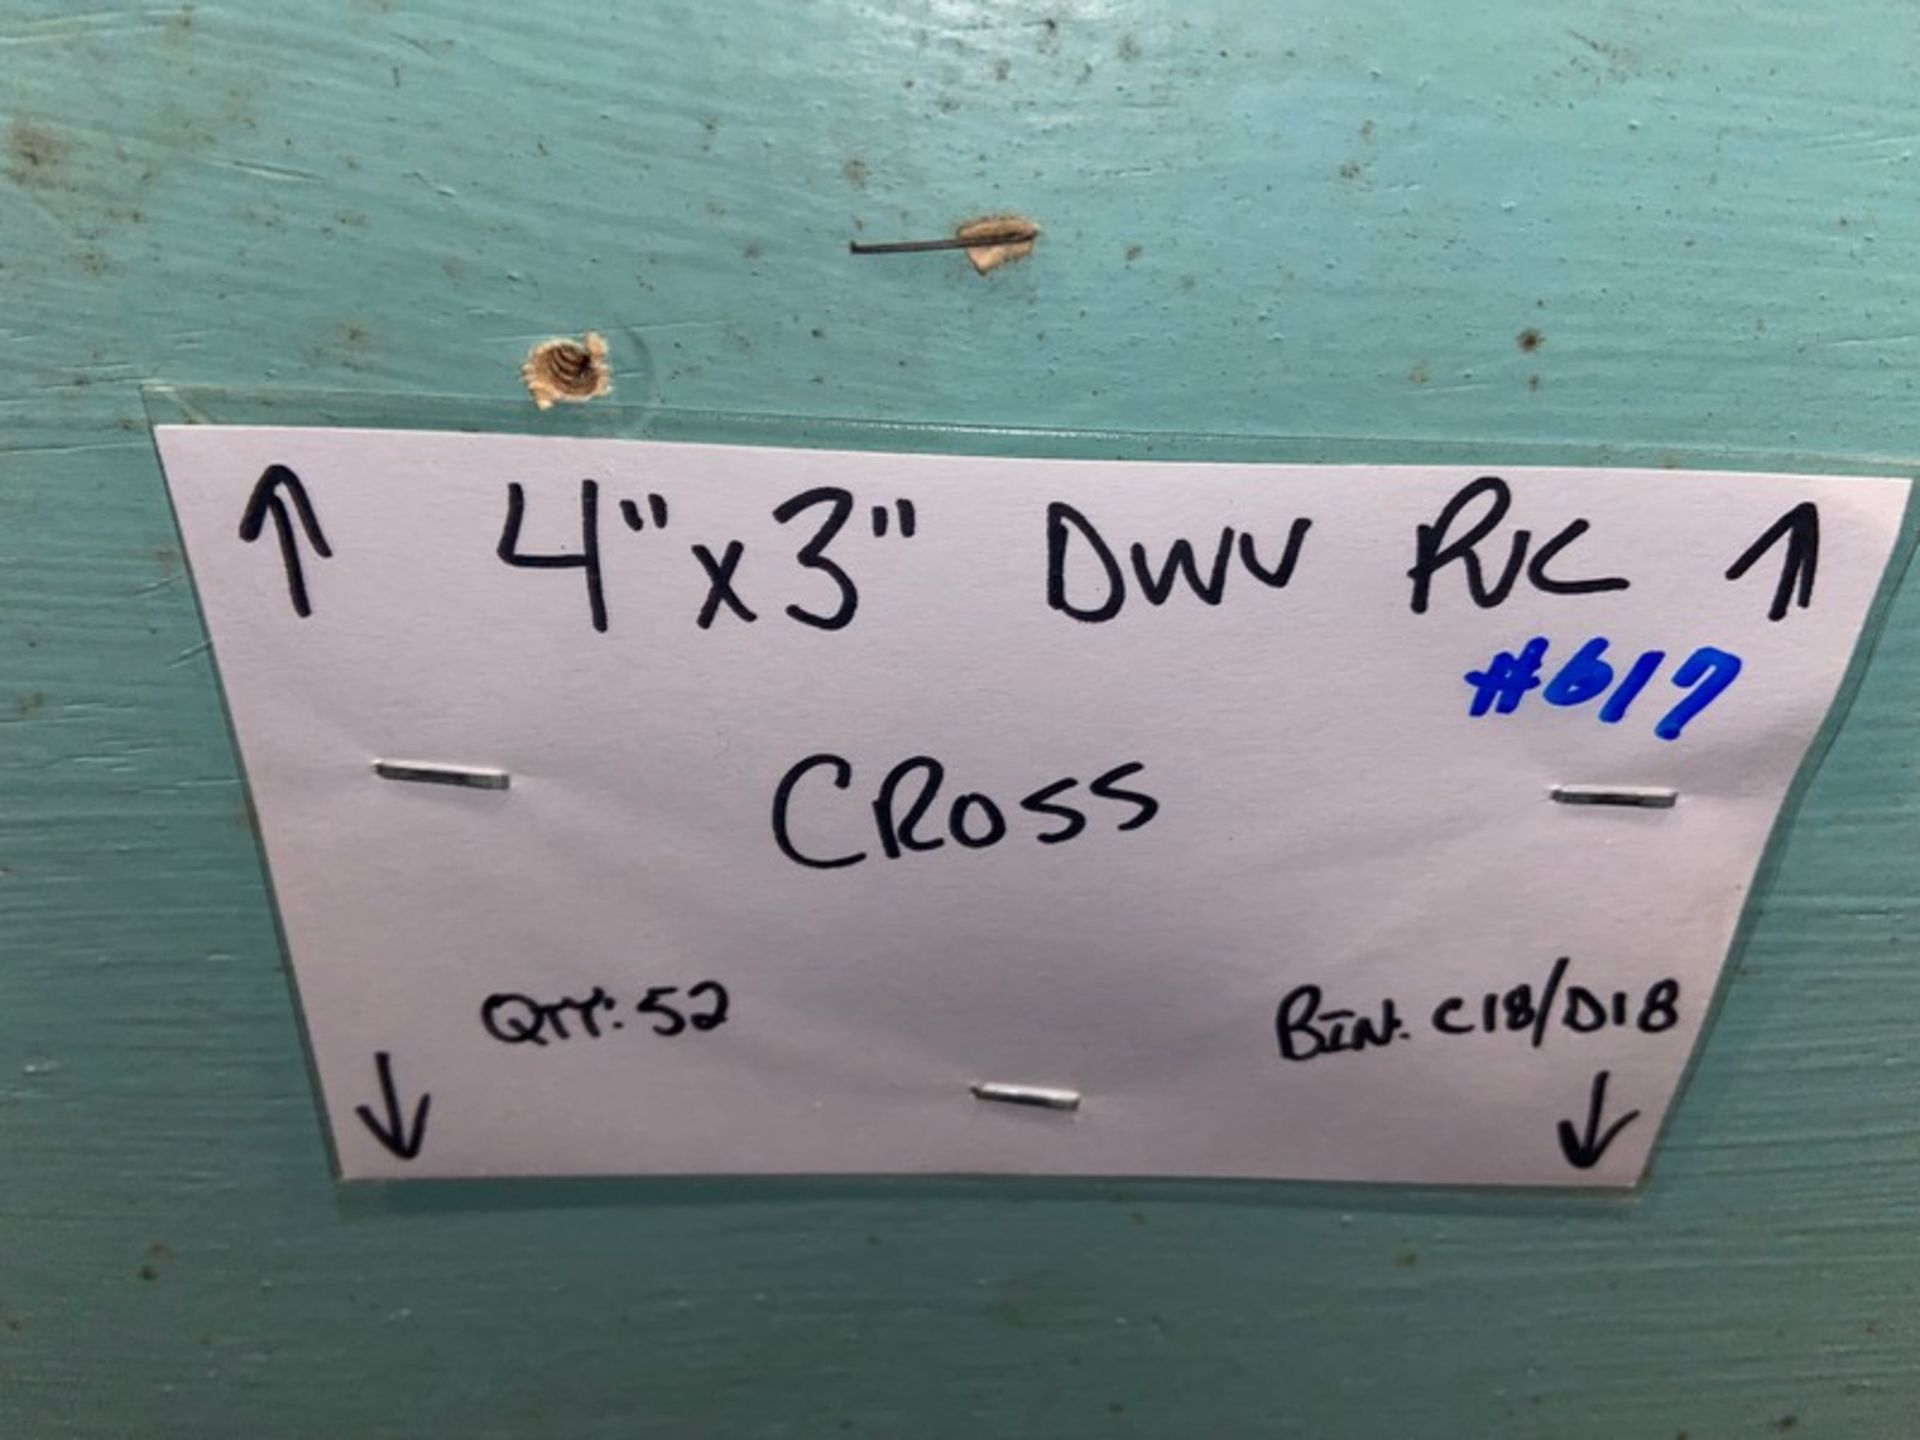 (52) 4”x3” DWV PVC CROSS(Bin:C18/D18) (LOCATED IN MONROEVILLE, PA) - Image 3 of 3